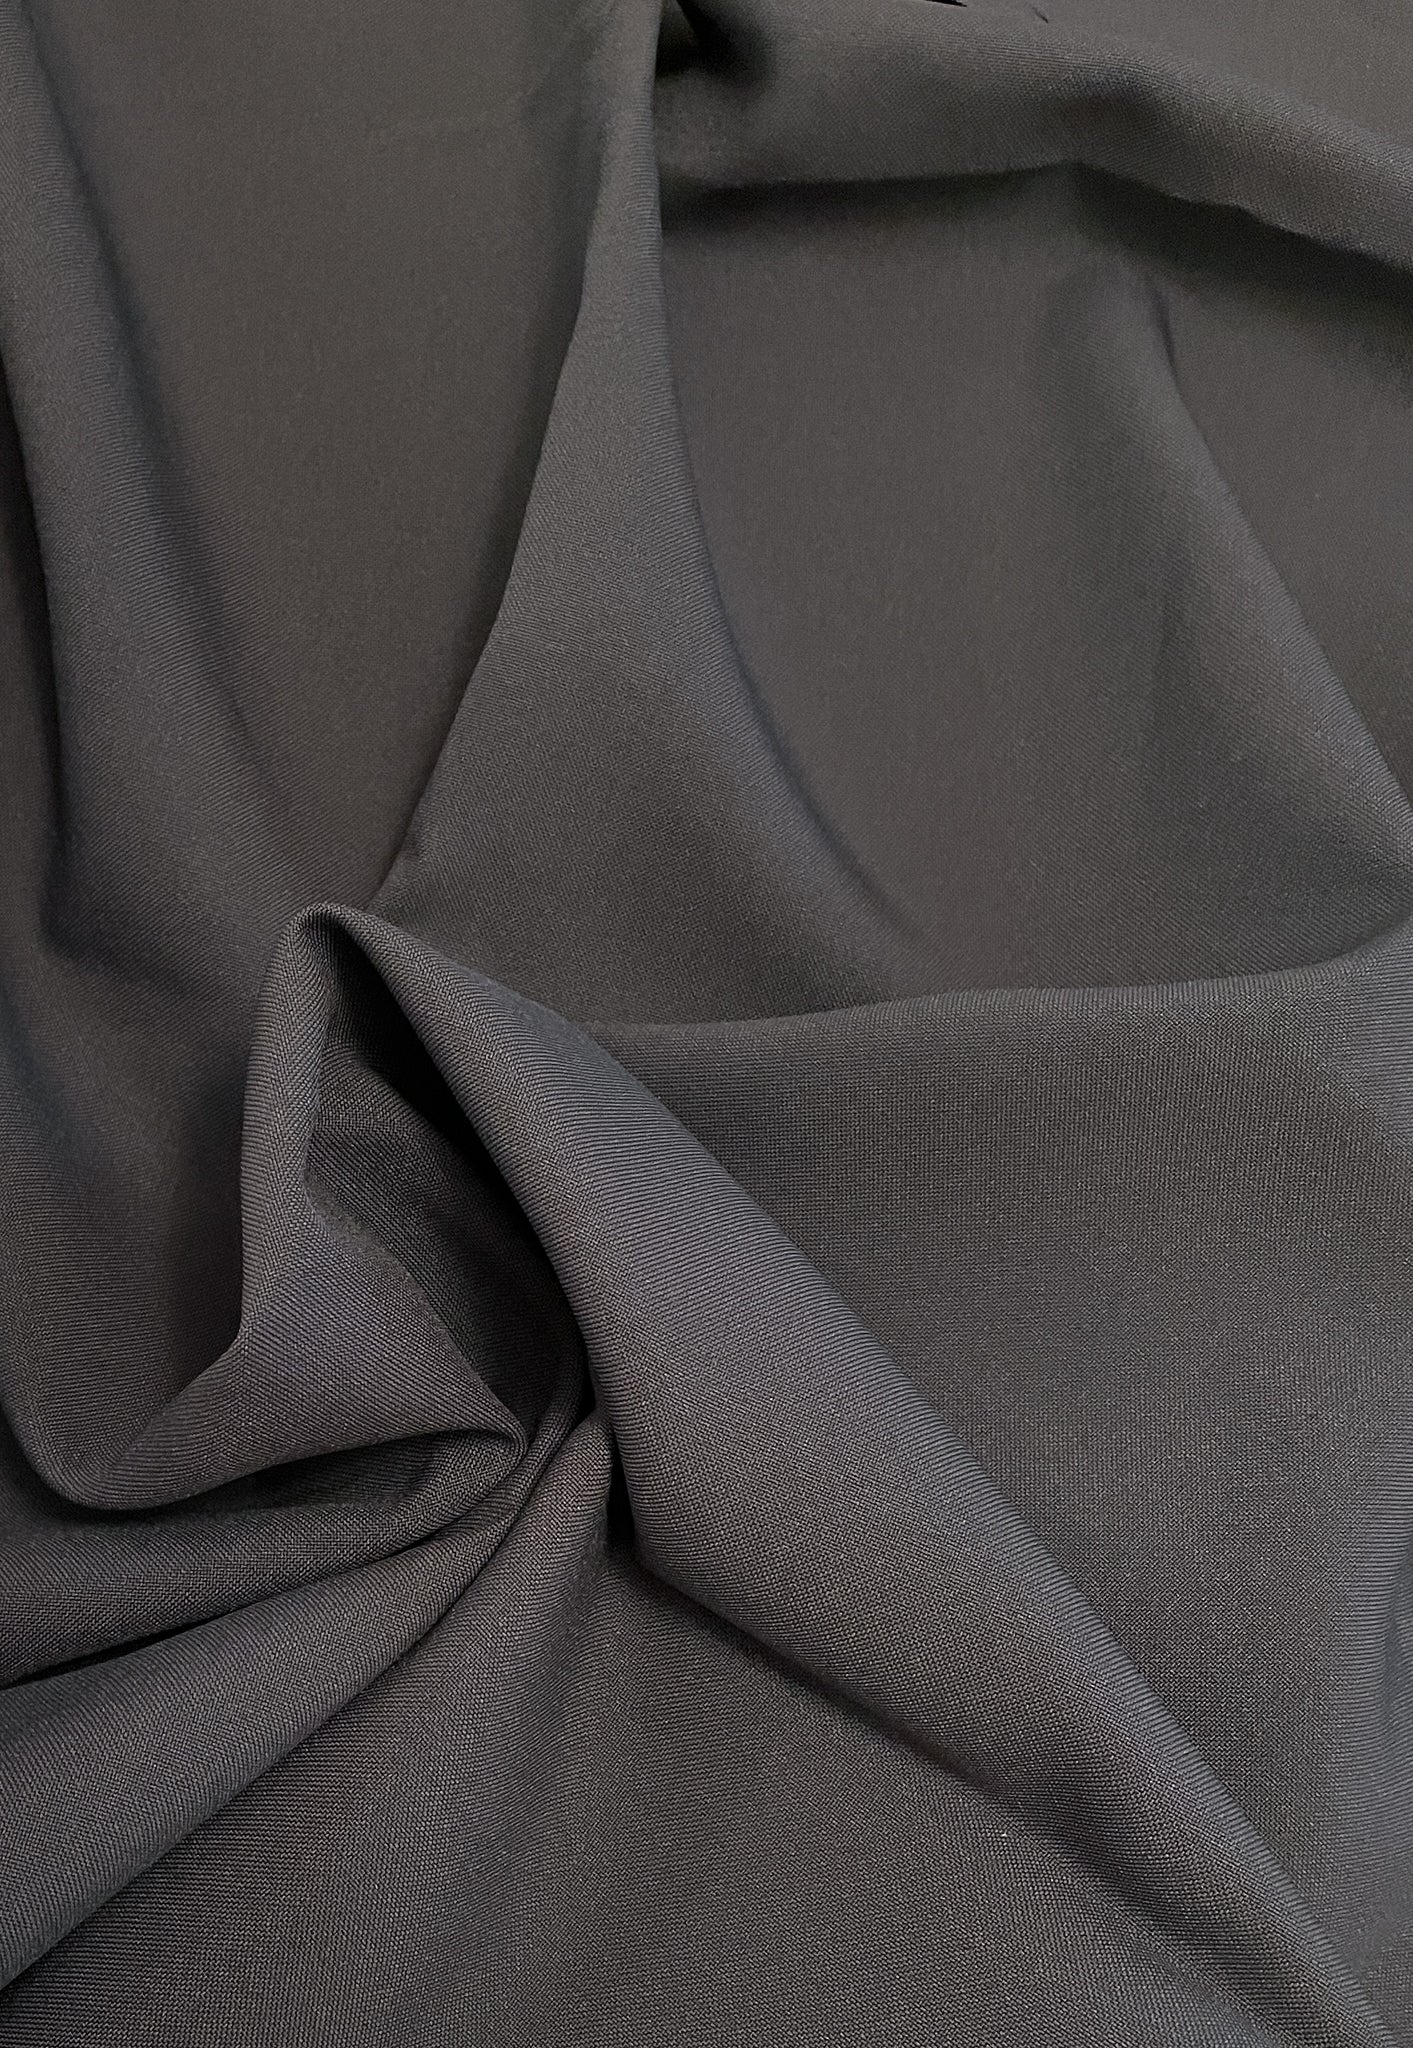 SALE 1/2 YD Polyester Remnant - Dark Gray